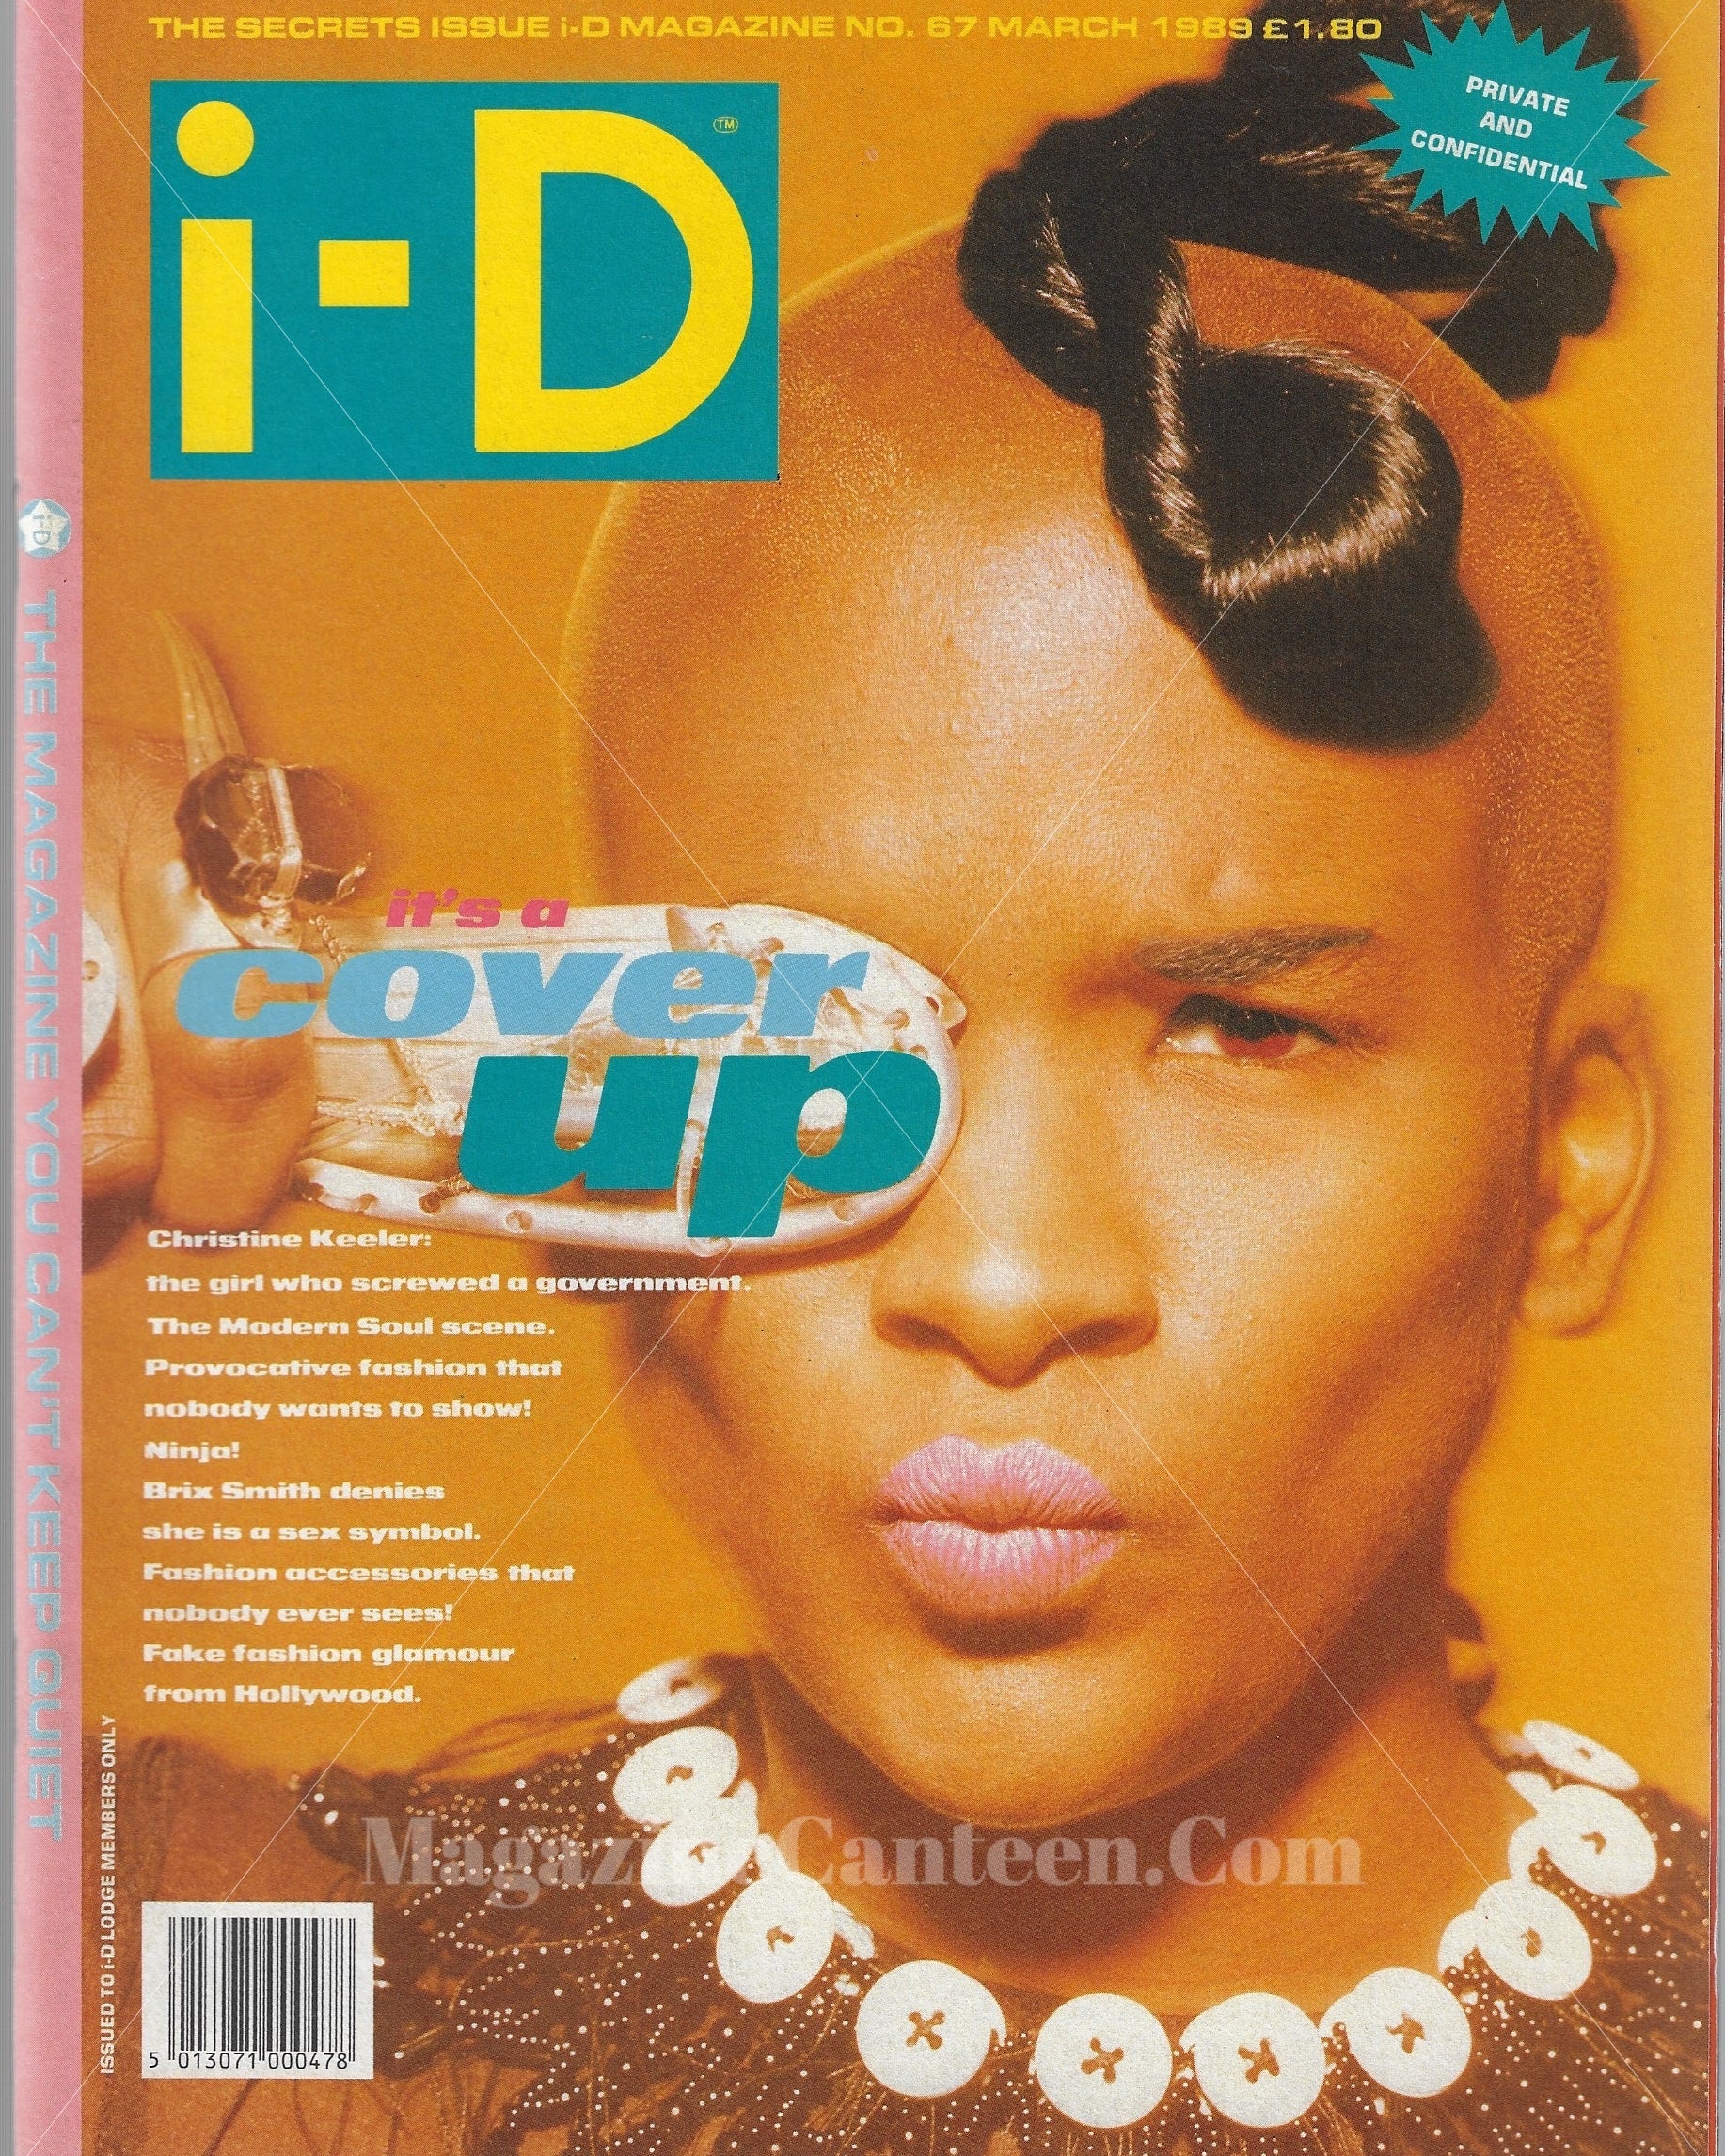 I-D Magazine 67 - The Secrets Issue 1989